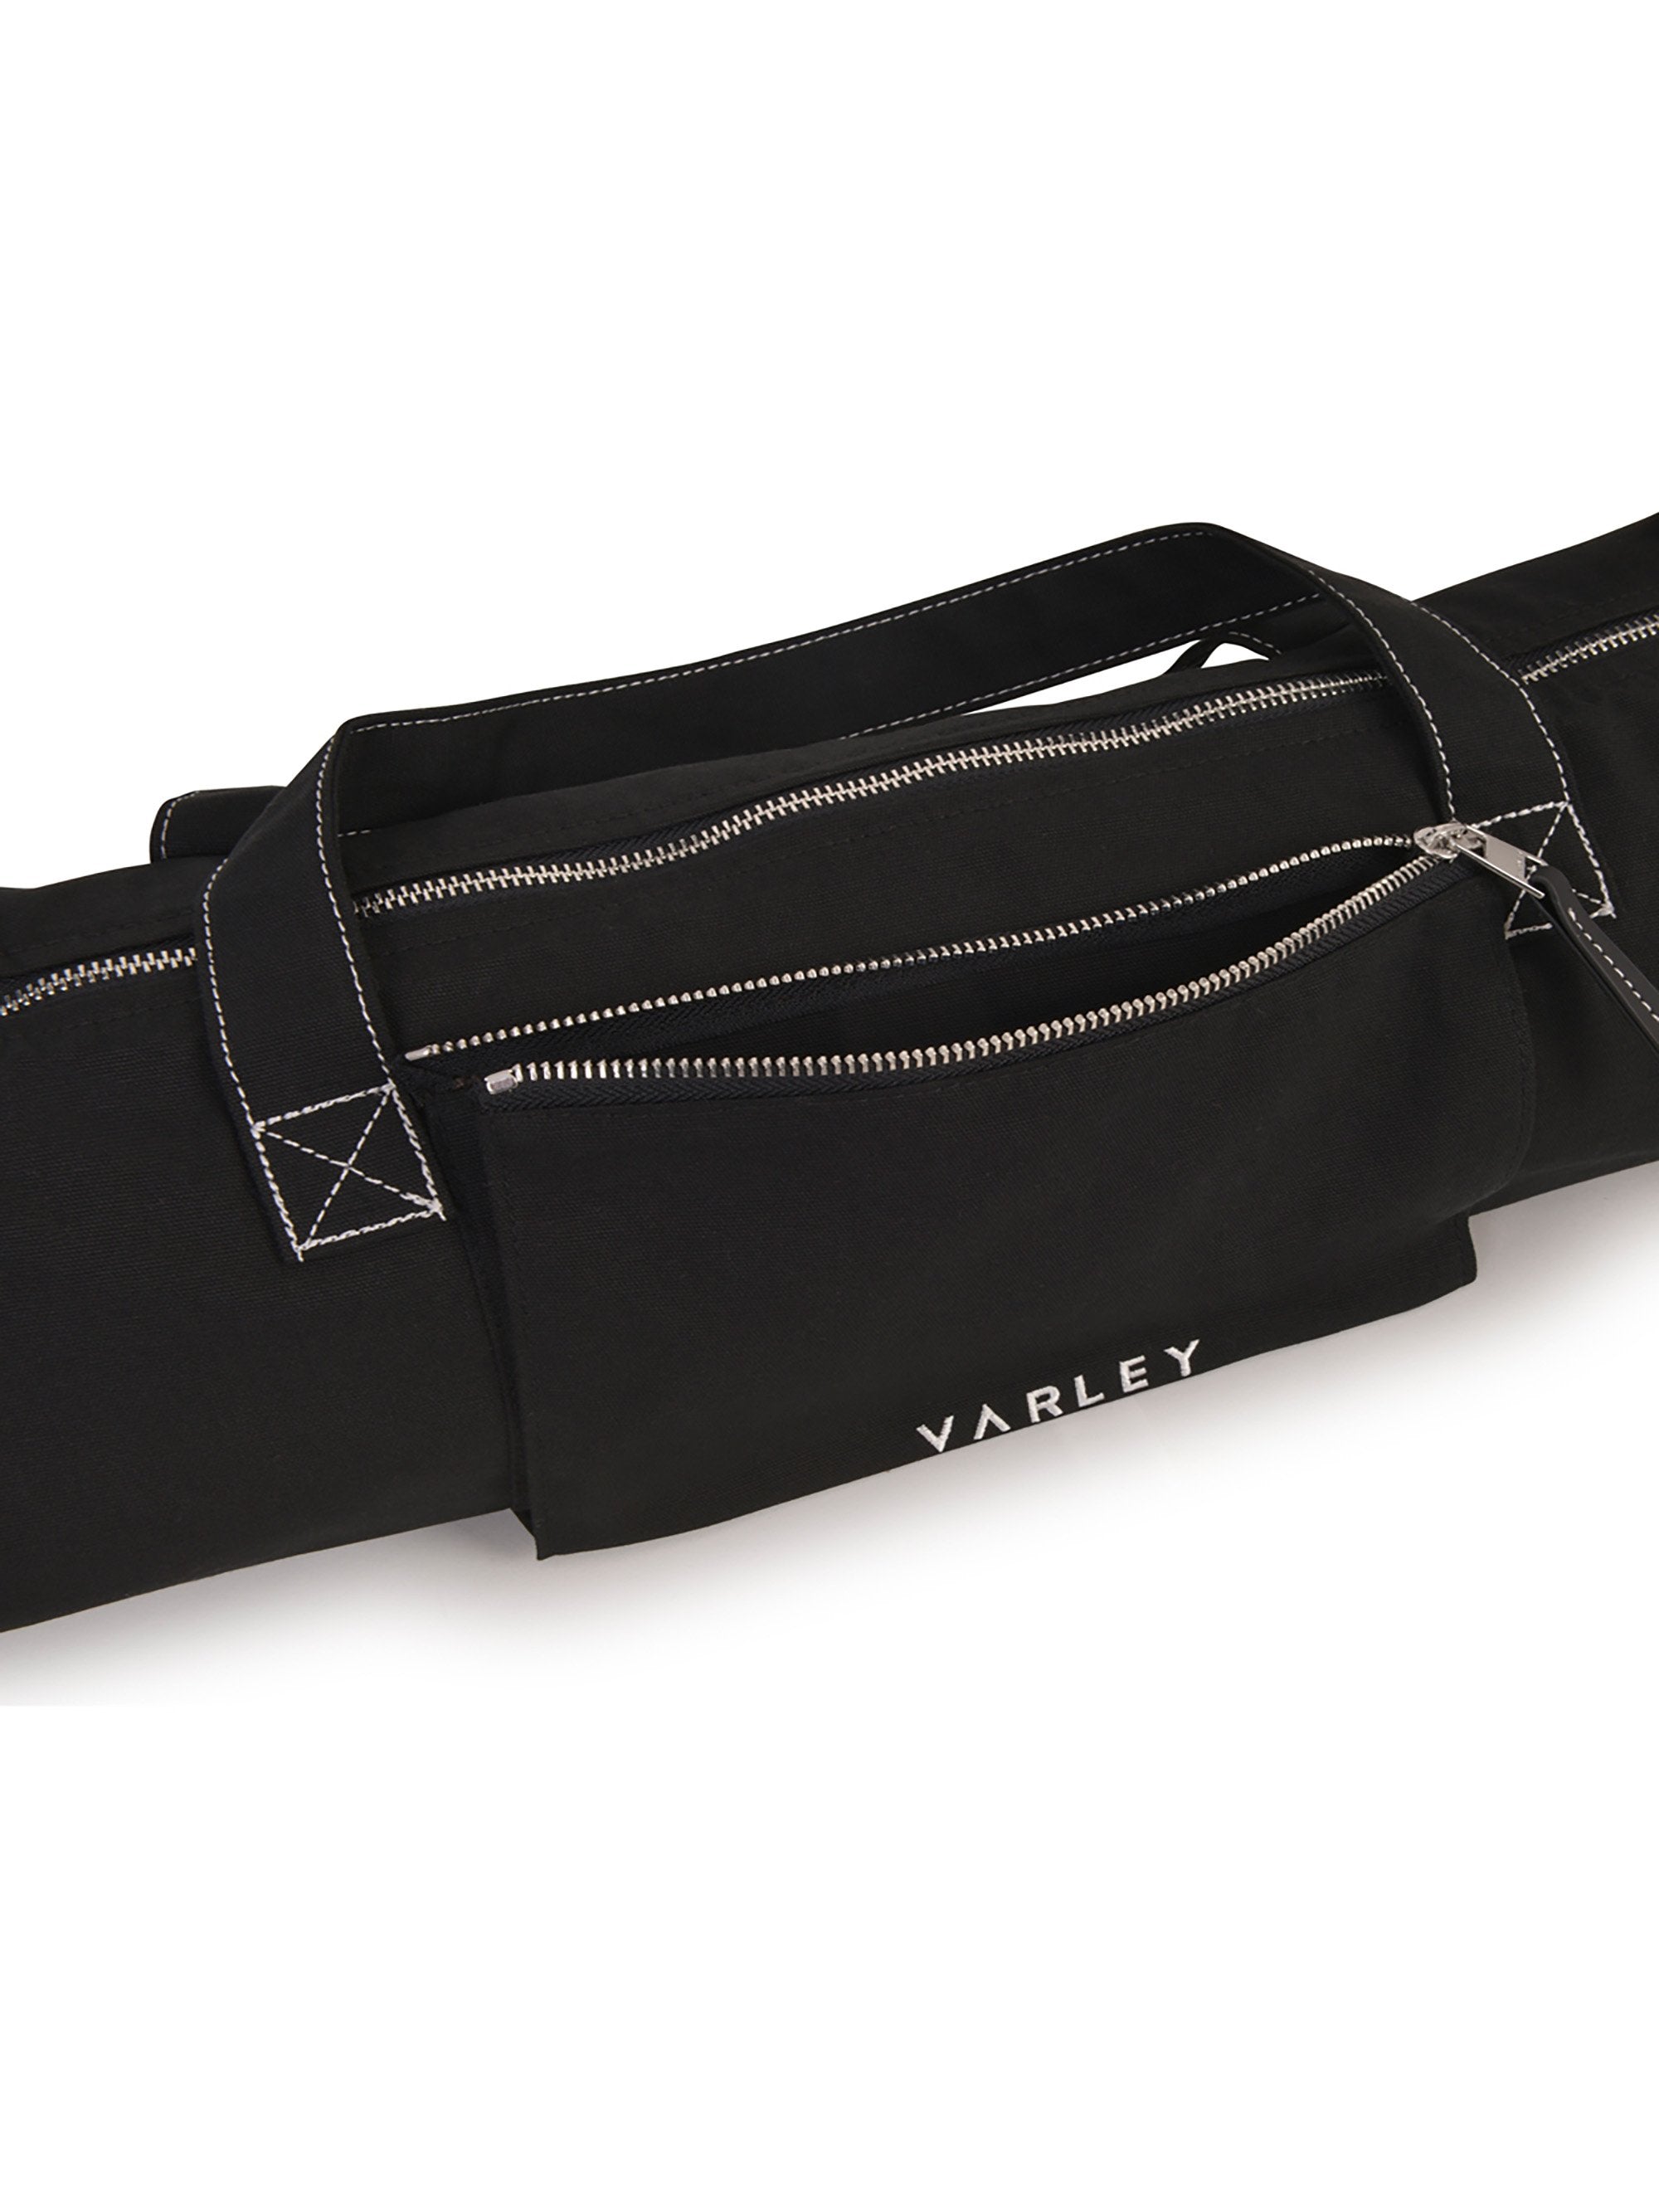 Varley Yoga Mat – Luxe Leopard